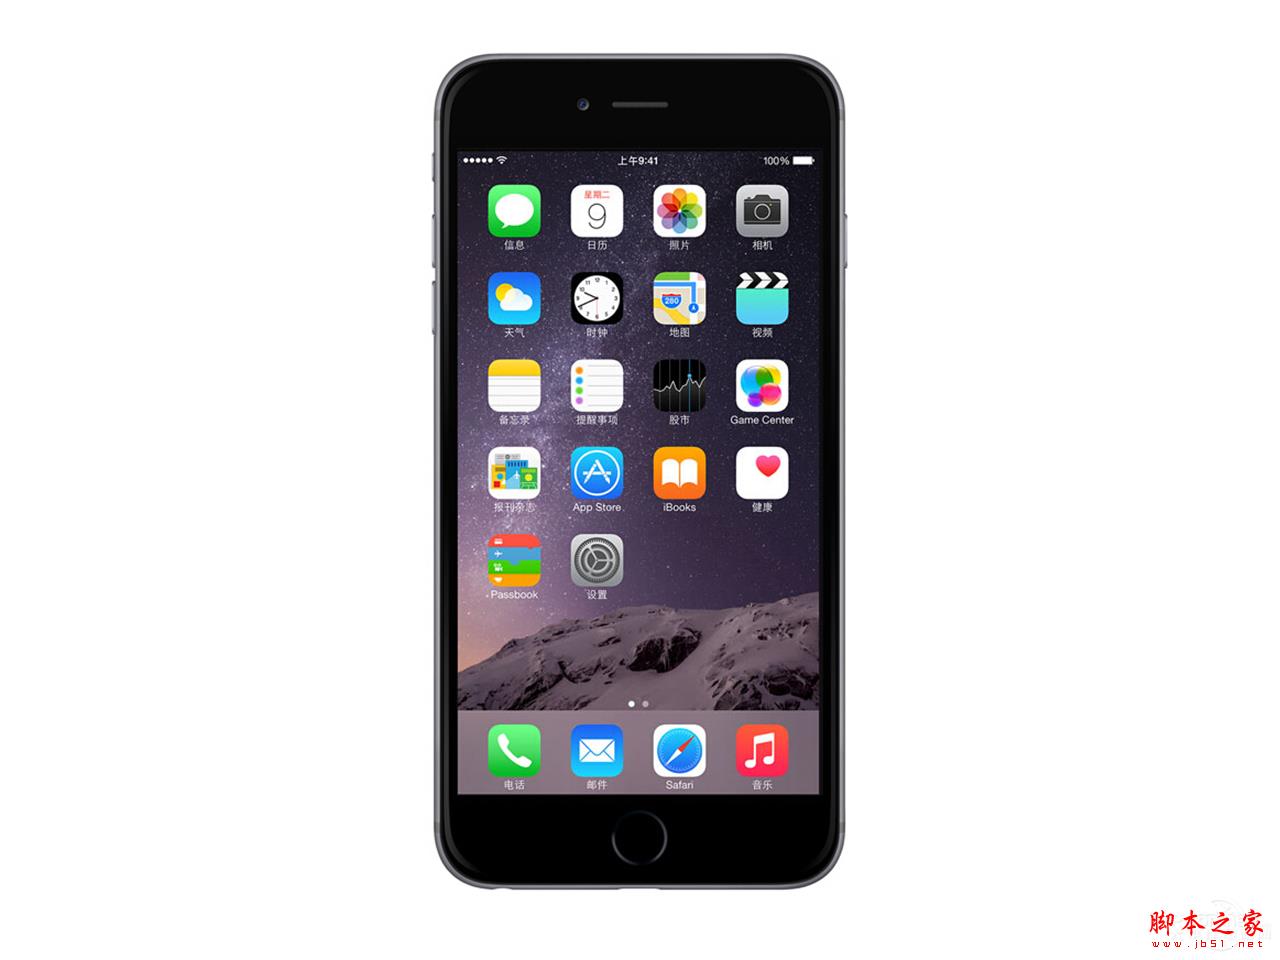 iPhone6 Plus的屏幕尺寸和分辨率是多少?